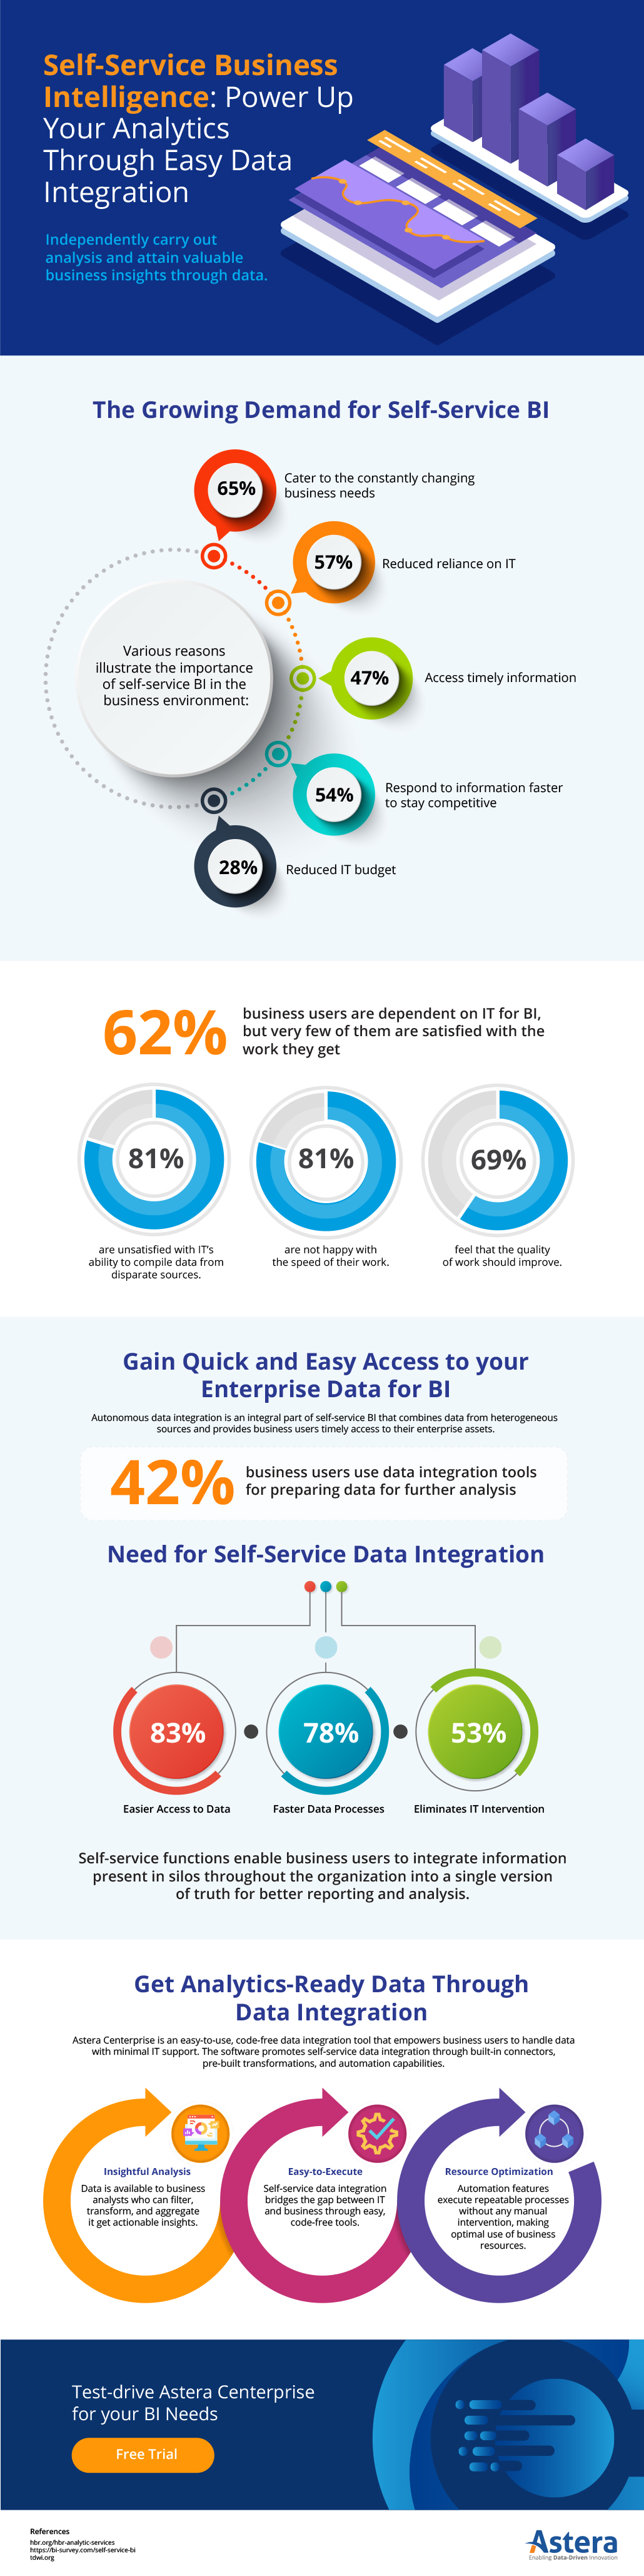 Self-Service BI: Power Up Your Analytics Through Easy Data Integration infographic